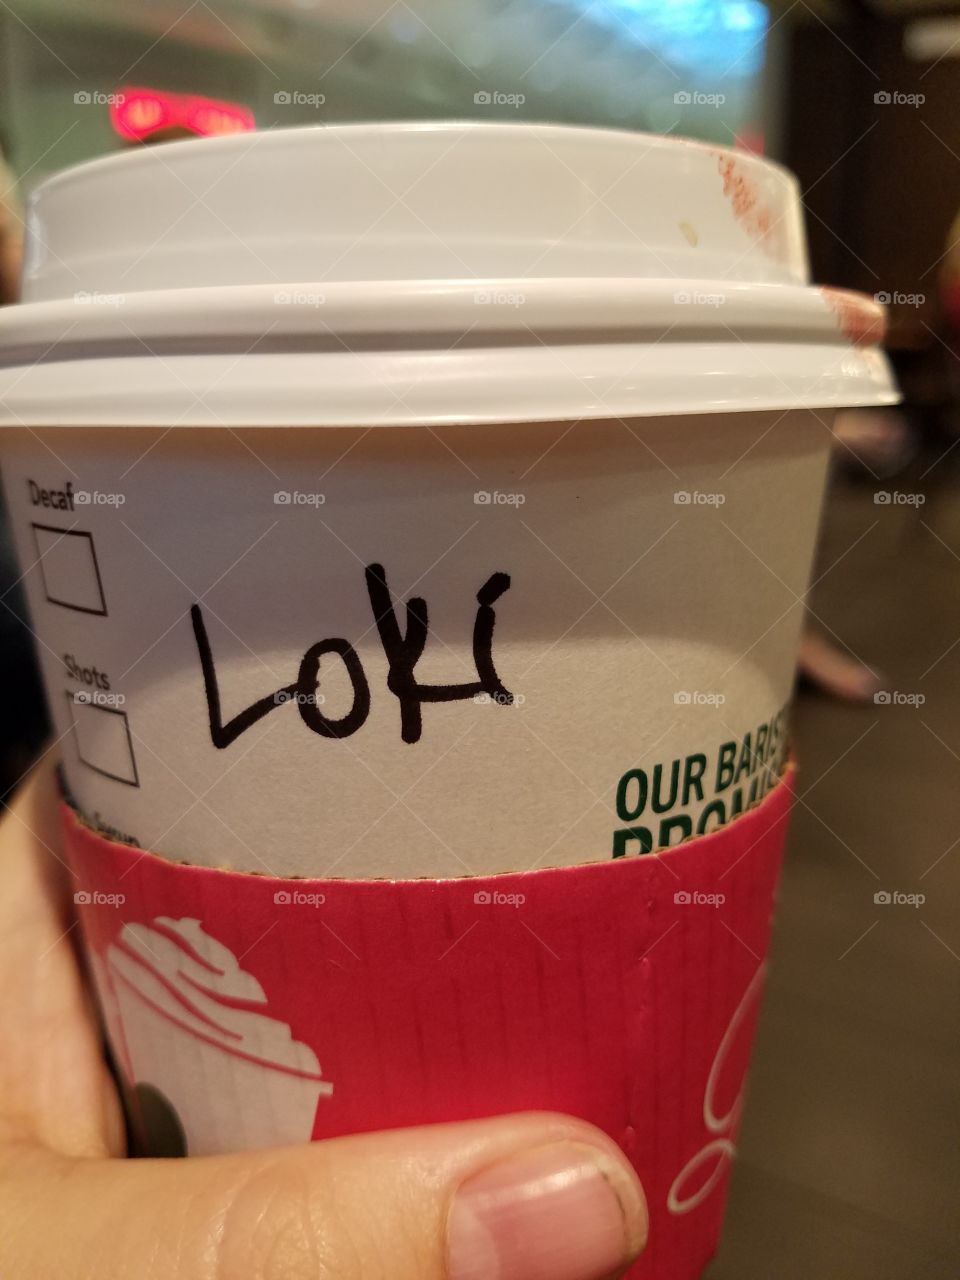 Loki at Starbucks